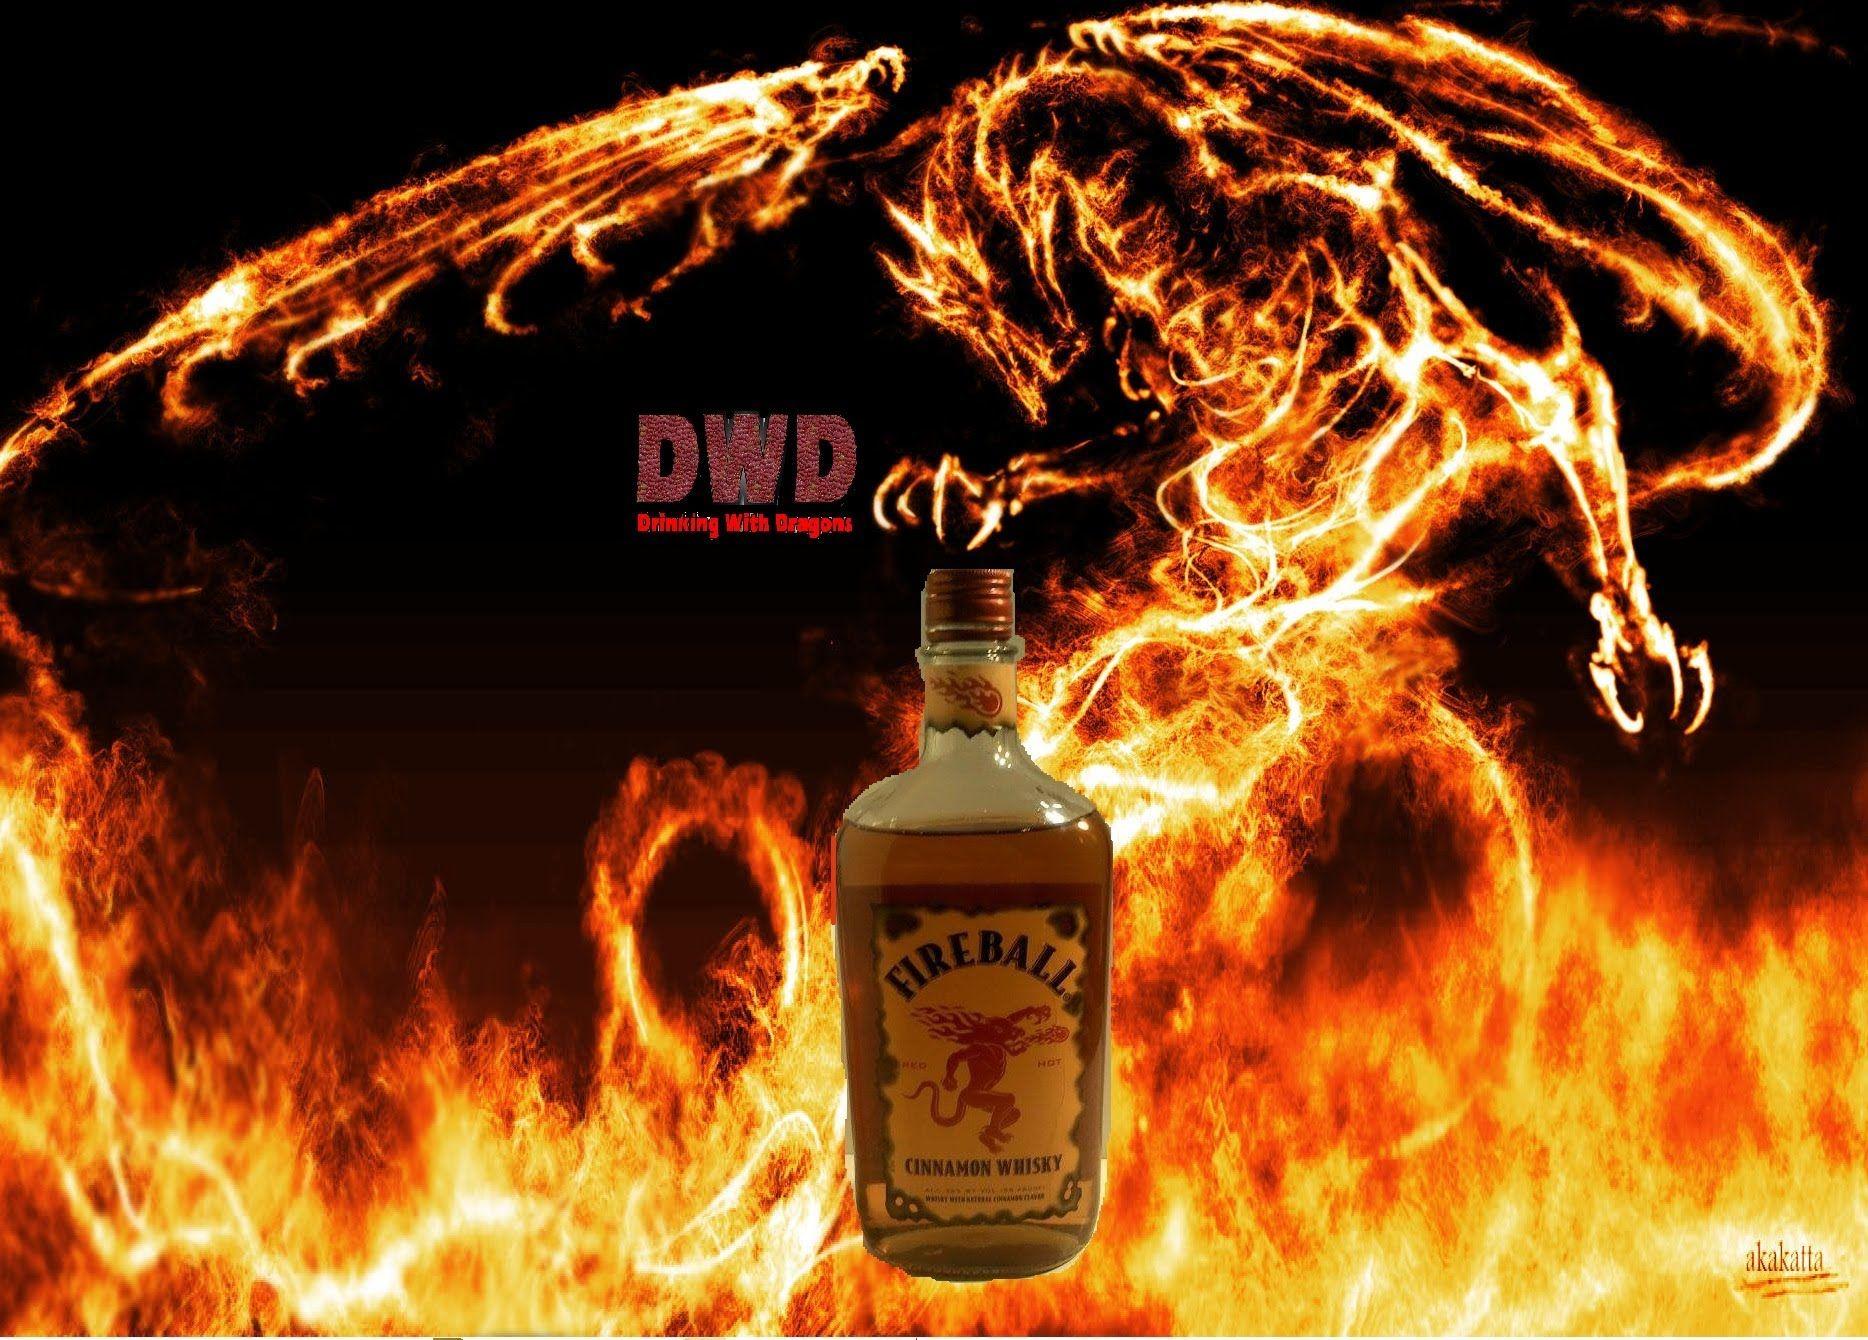 Fireball cinnamon whisky